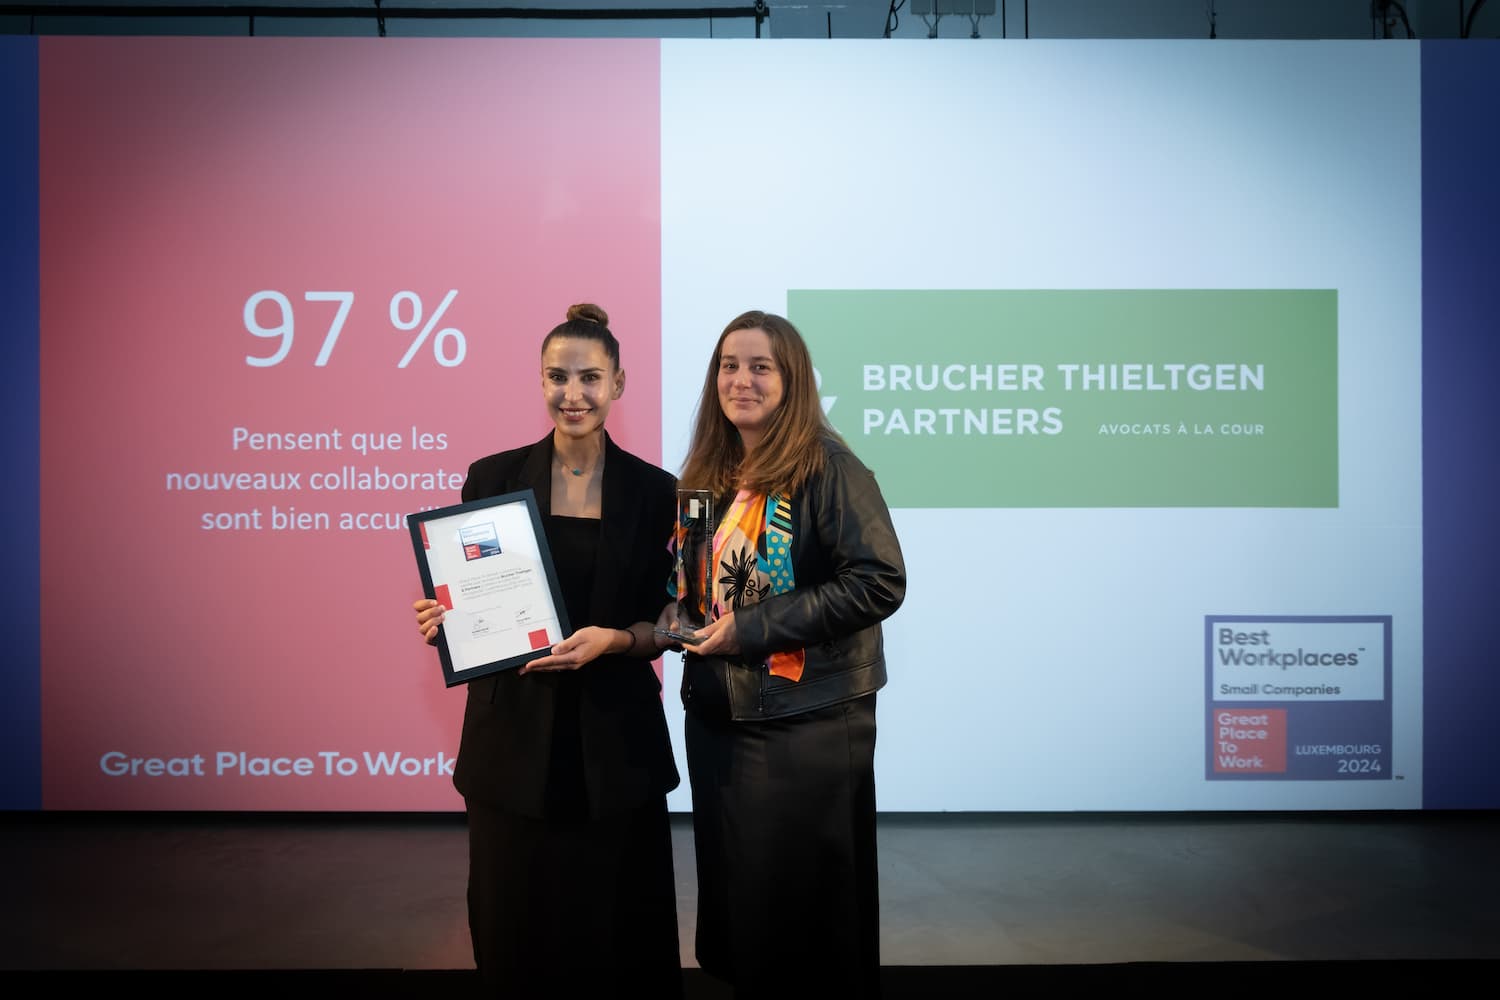  Brucher Thieltgen & Partners, N°8 Small Best Workplaces Luxembourg 2024